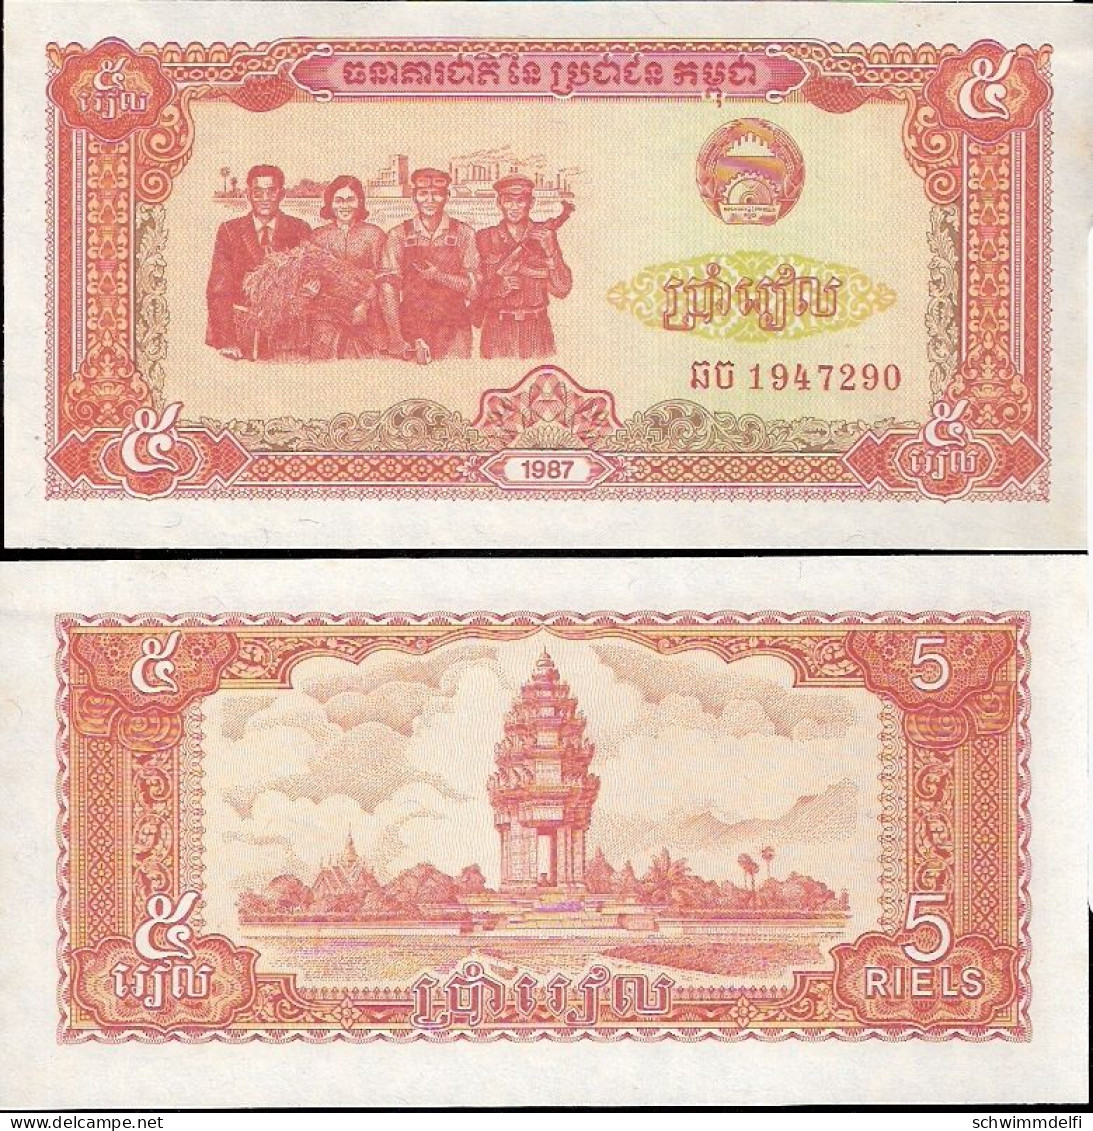 KAMBODSCHA, CAMBODIA, CAMBOYA - 5 RIELS 1987 - SIN CIRCULAR - UNZIRKULIERT - - Cambogia